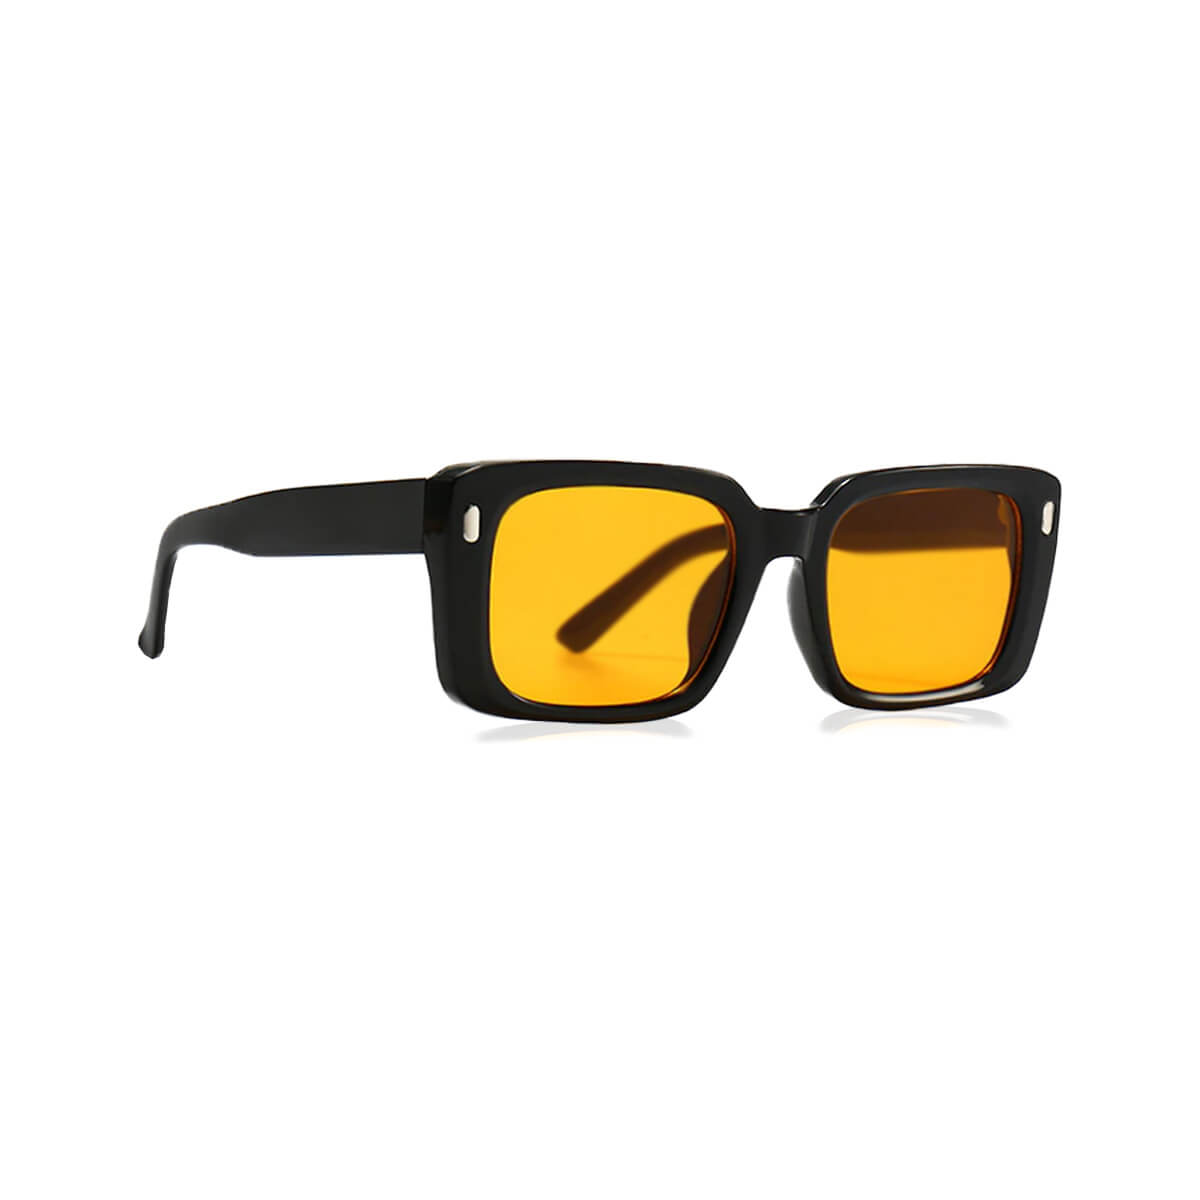 Ash Women's Square Sunglasses - Black Orange